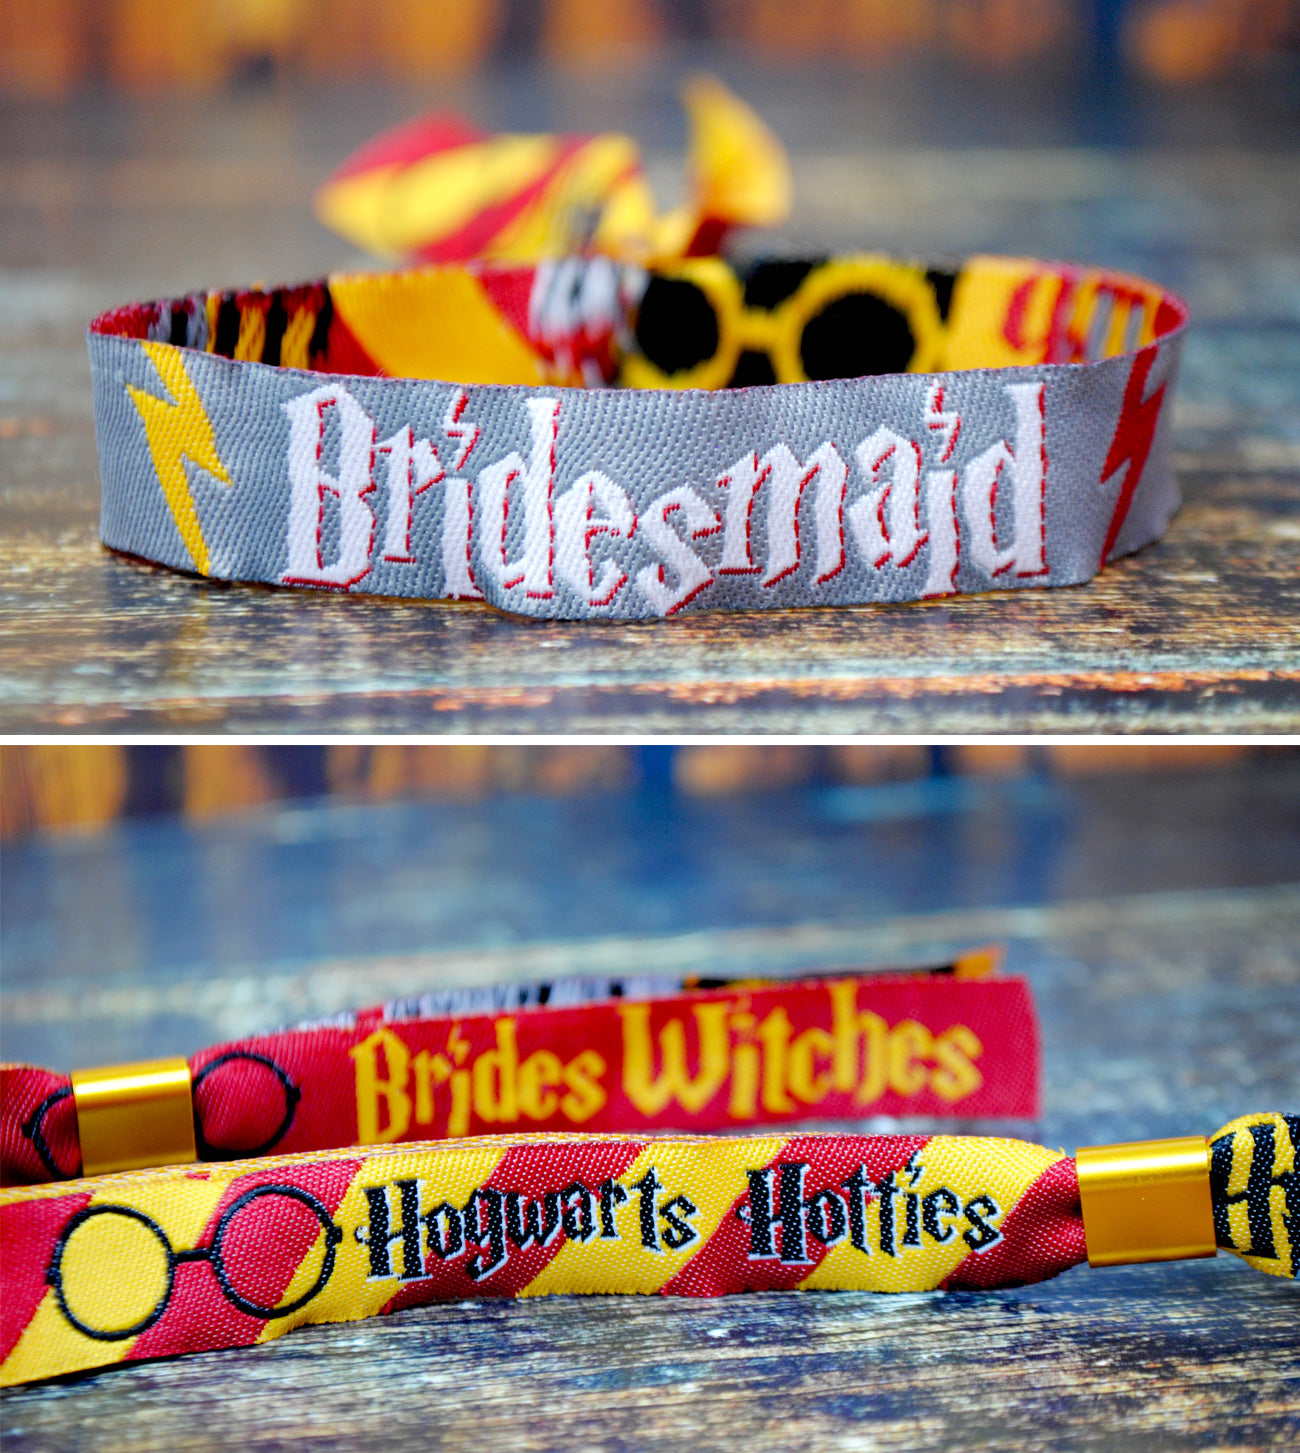 hogwarts hotties harry potter bridesmaid wristband hen party